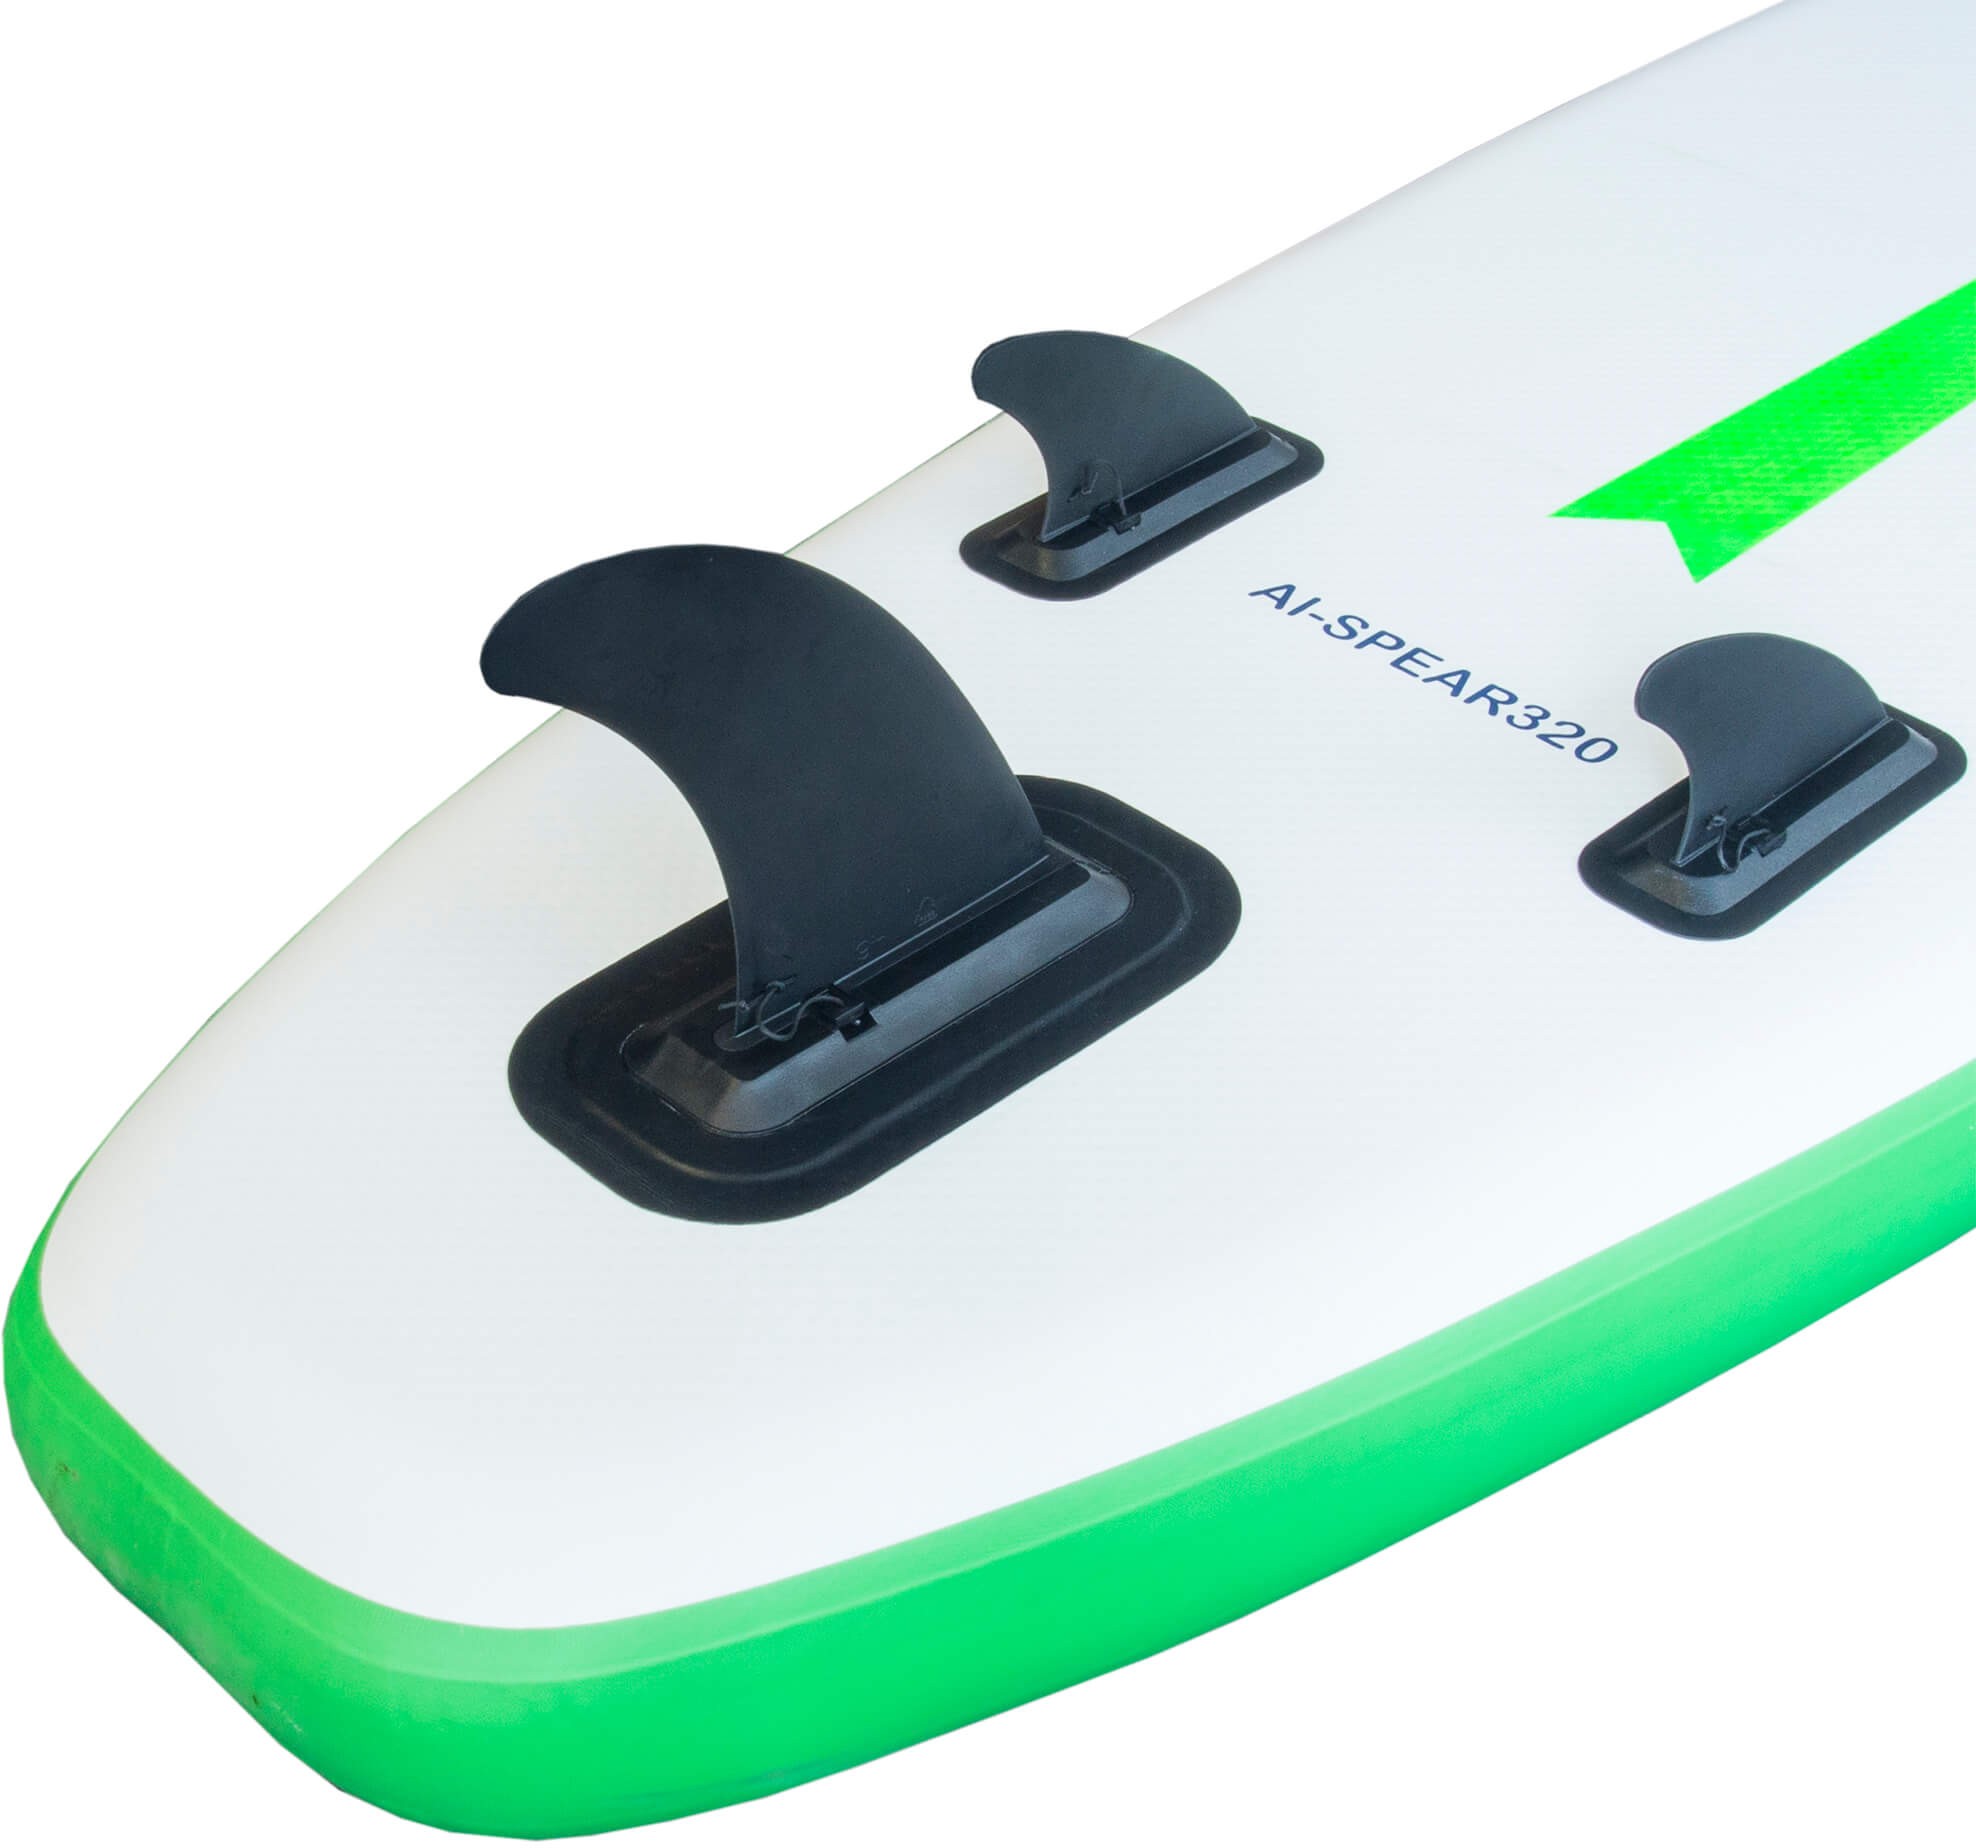 Paddleboard